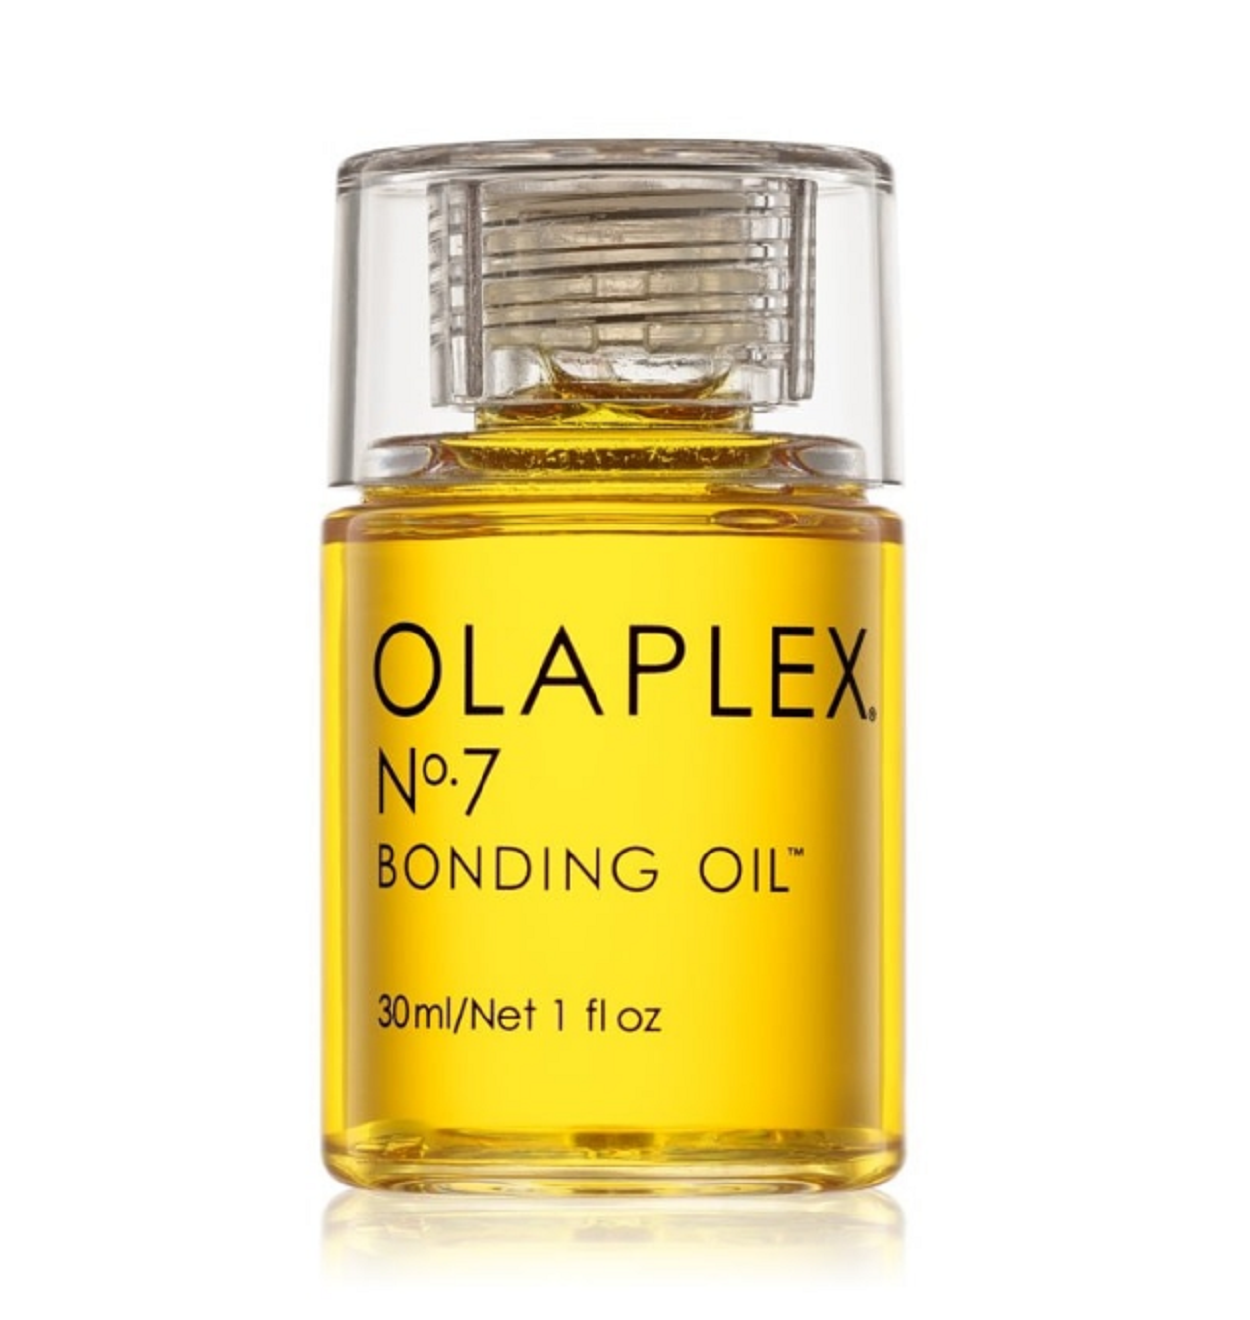  Olaplex No.7 Bonding Oil. 